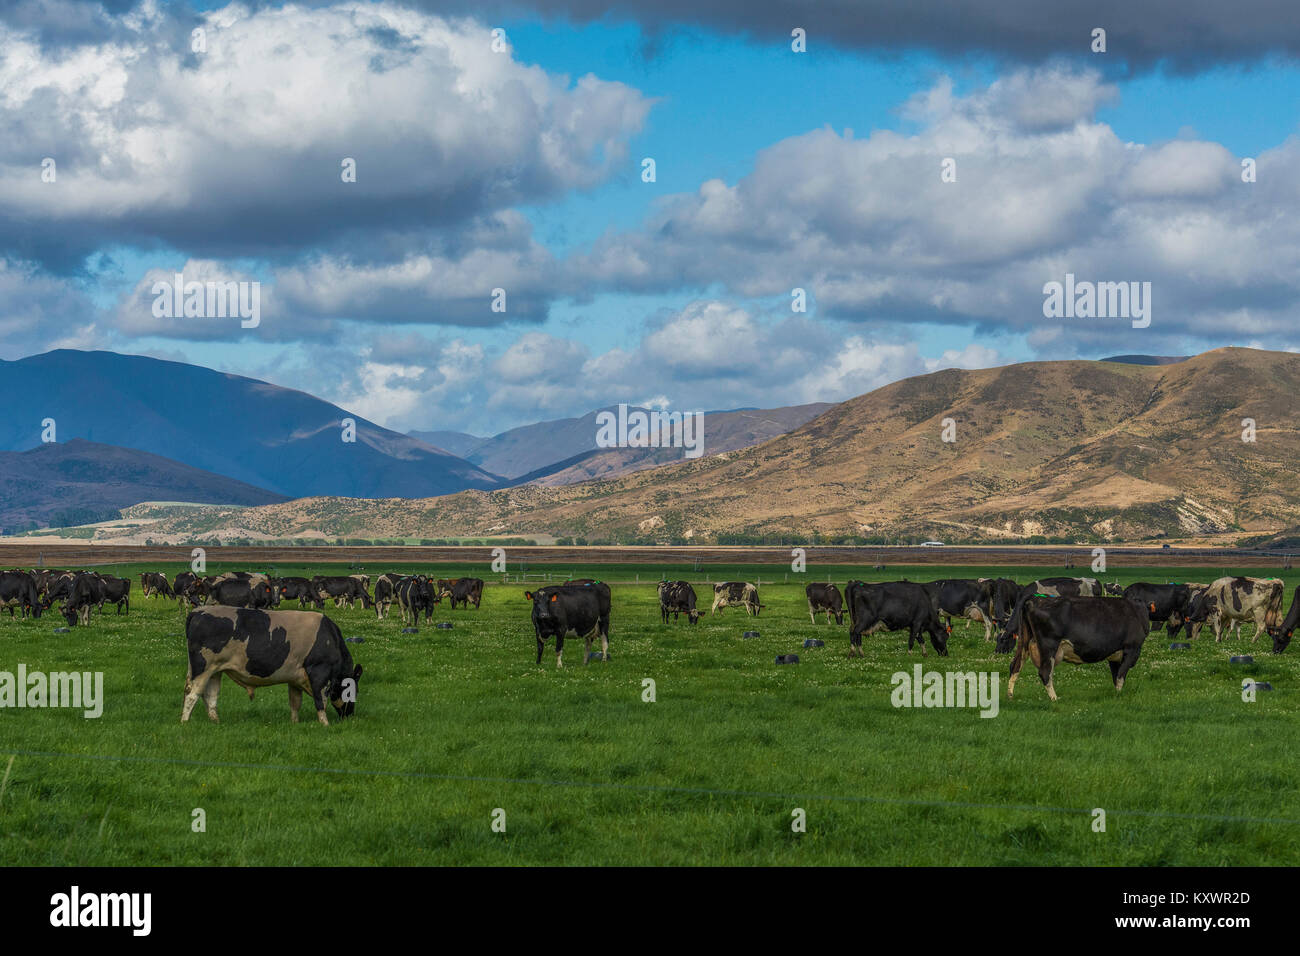 El ganado cerca del lago Tekapo, Nueva Zelanda Foto de stock